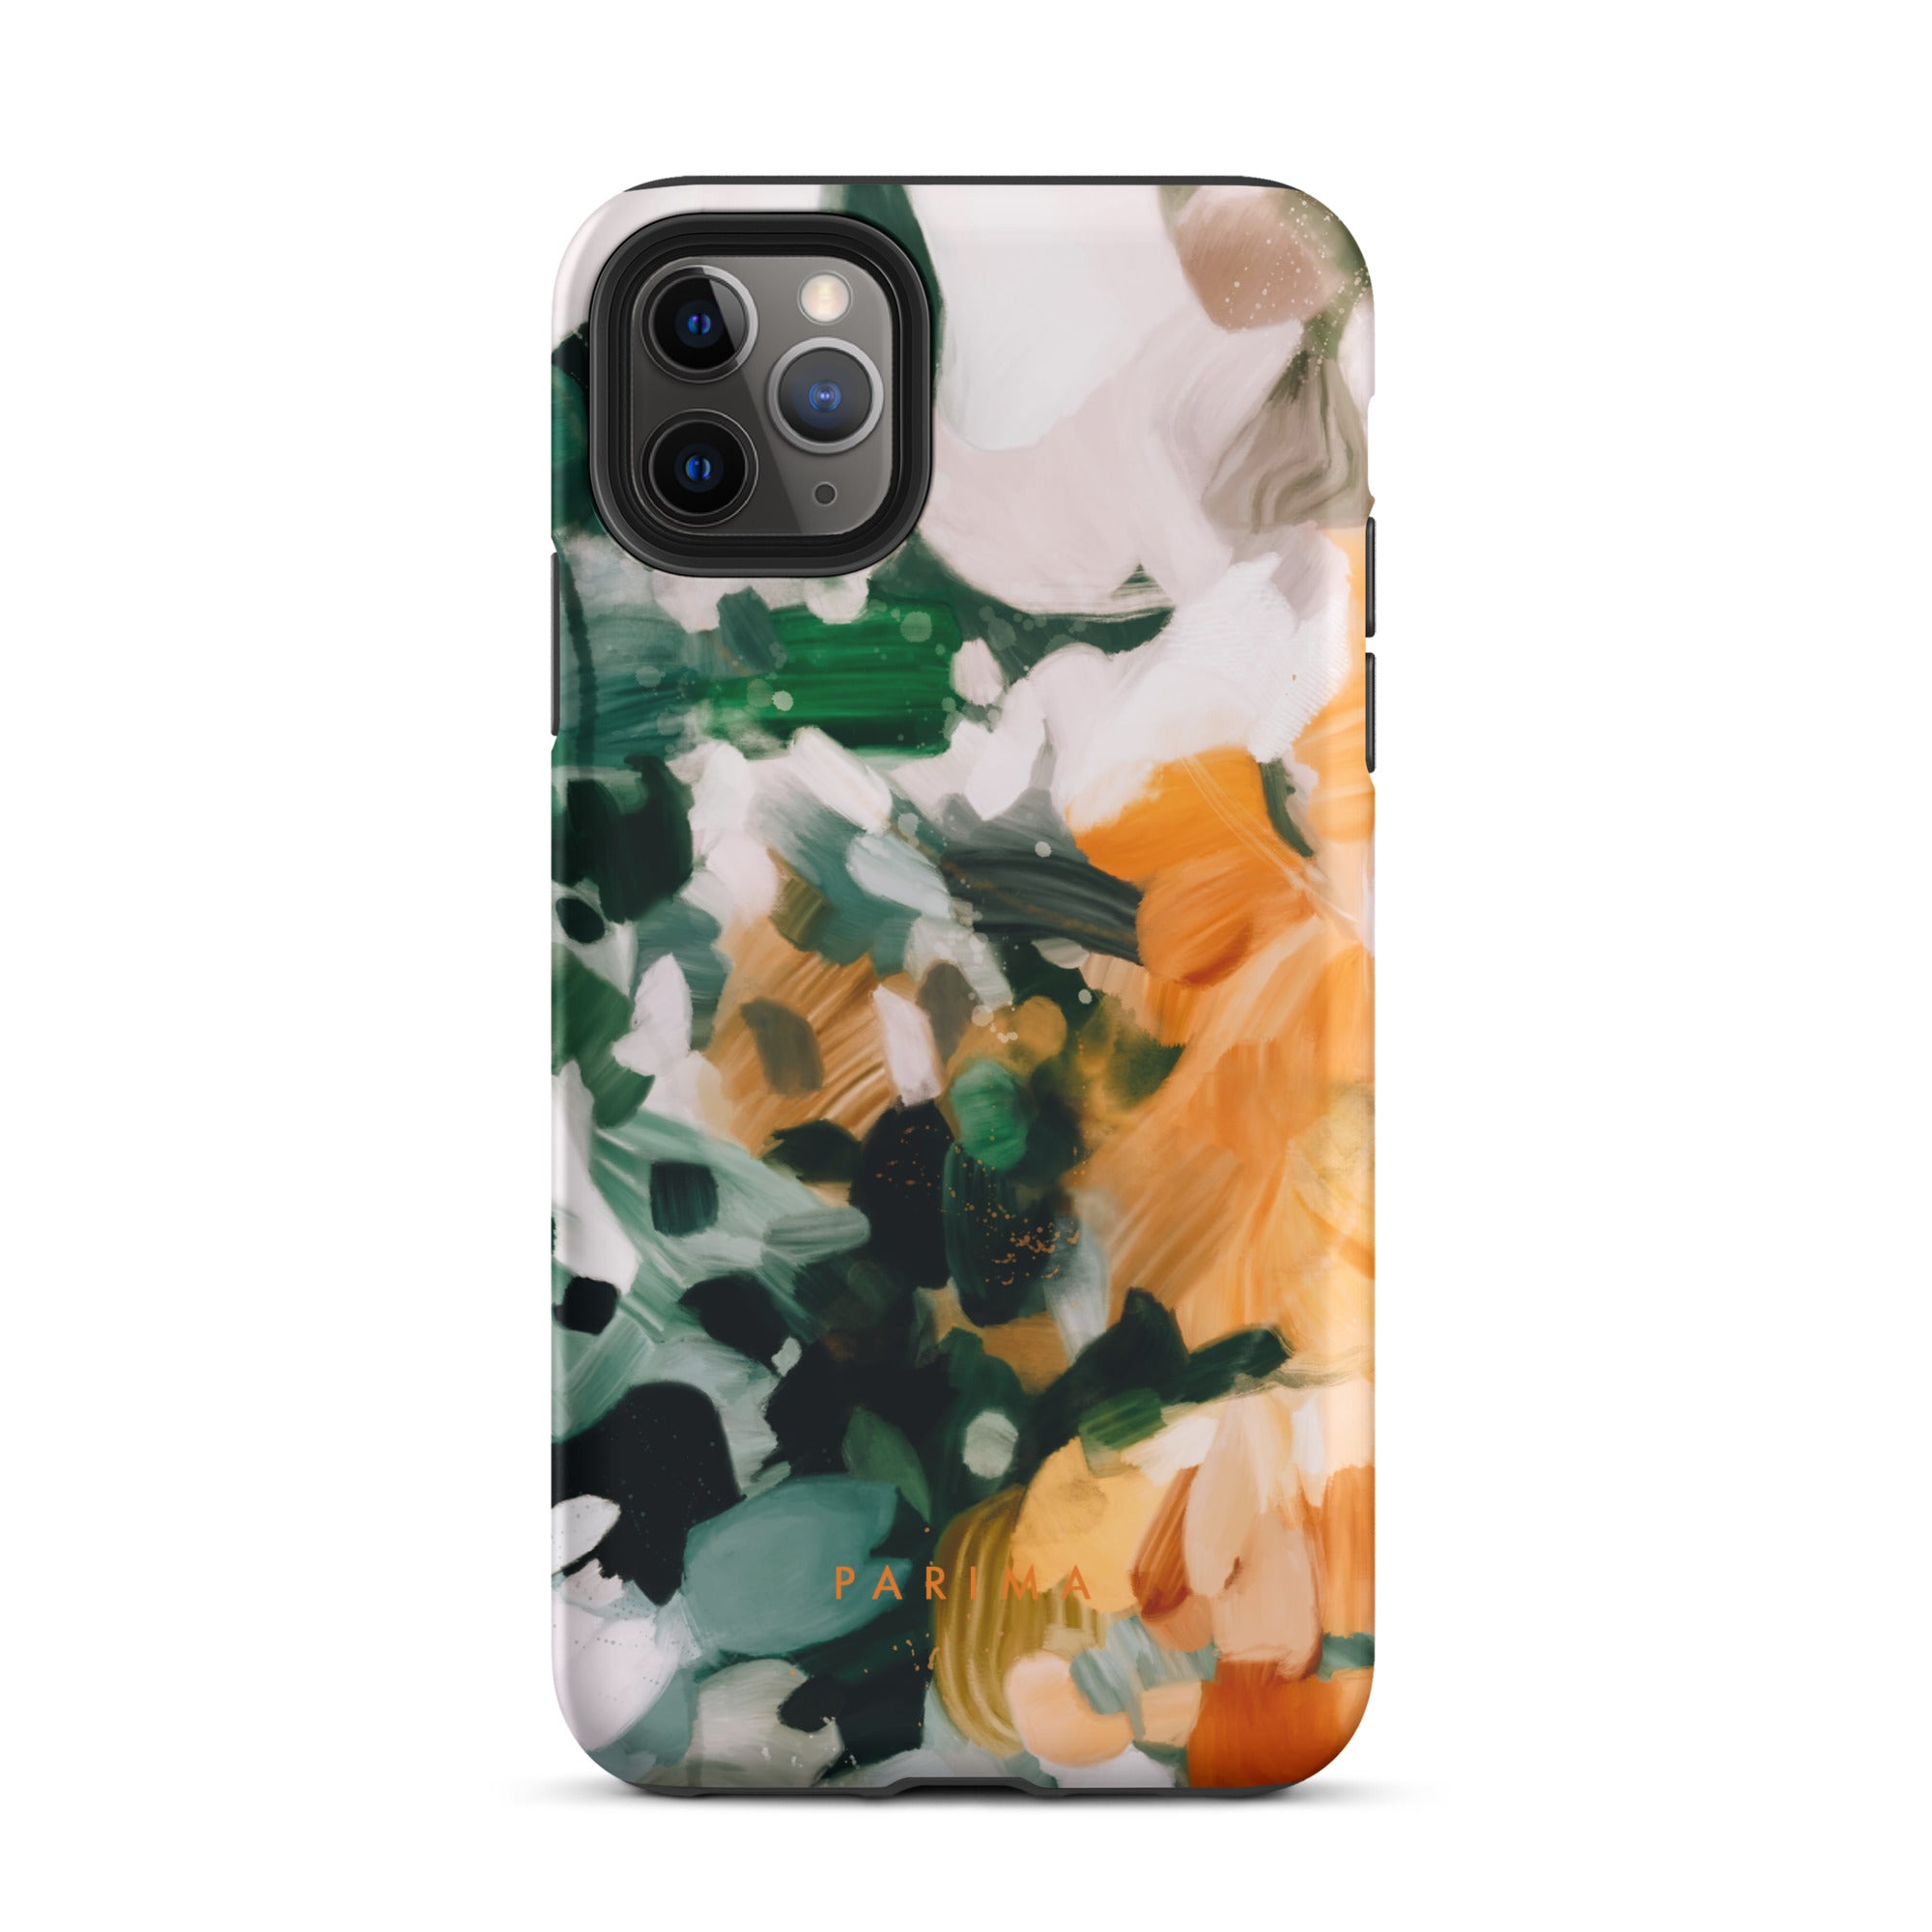 Aspen, green and orange abstract art - iPhone 11 Pro Max tough case by Parima Studio